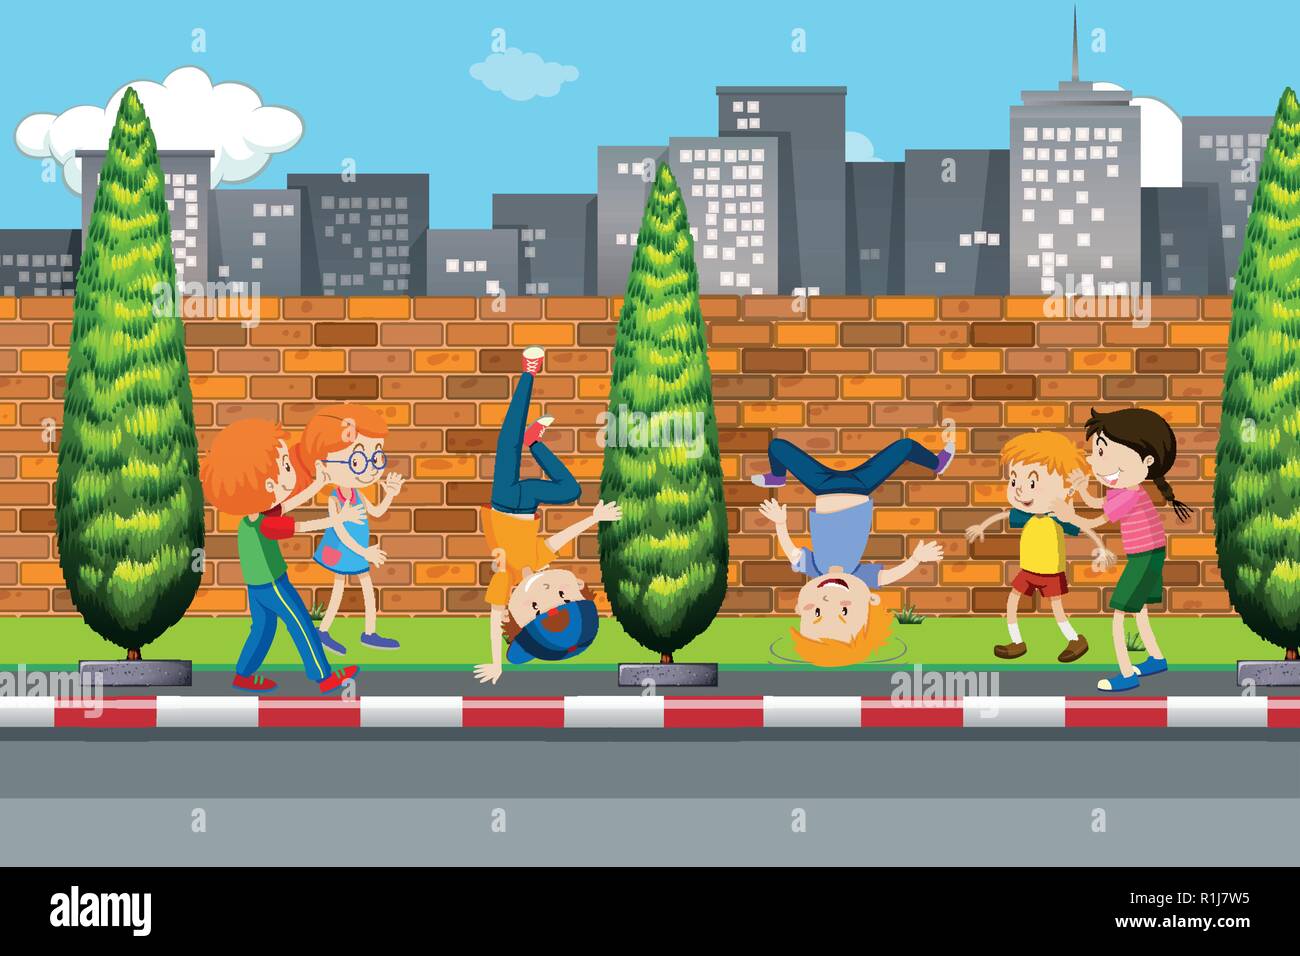 Children dancing on street illustration Stock Vector Image & Art - Alamy